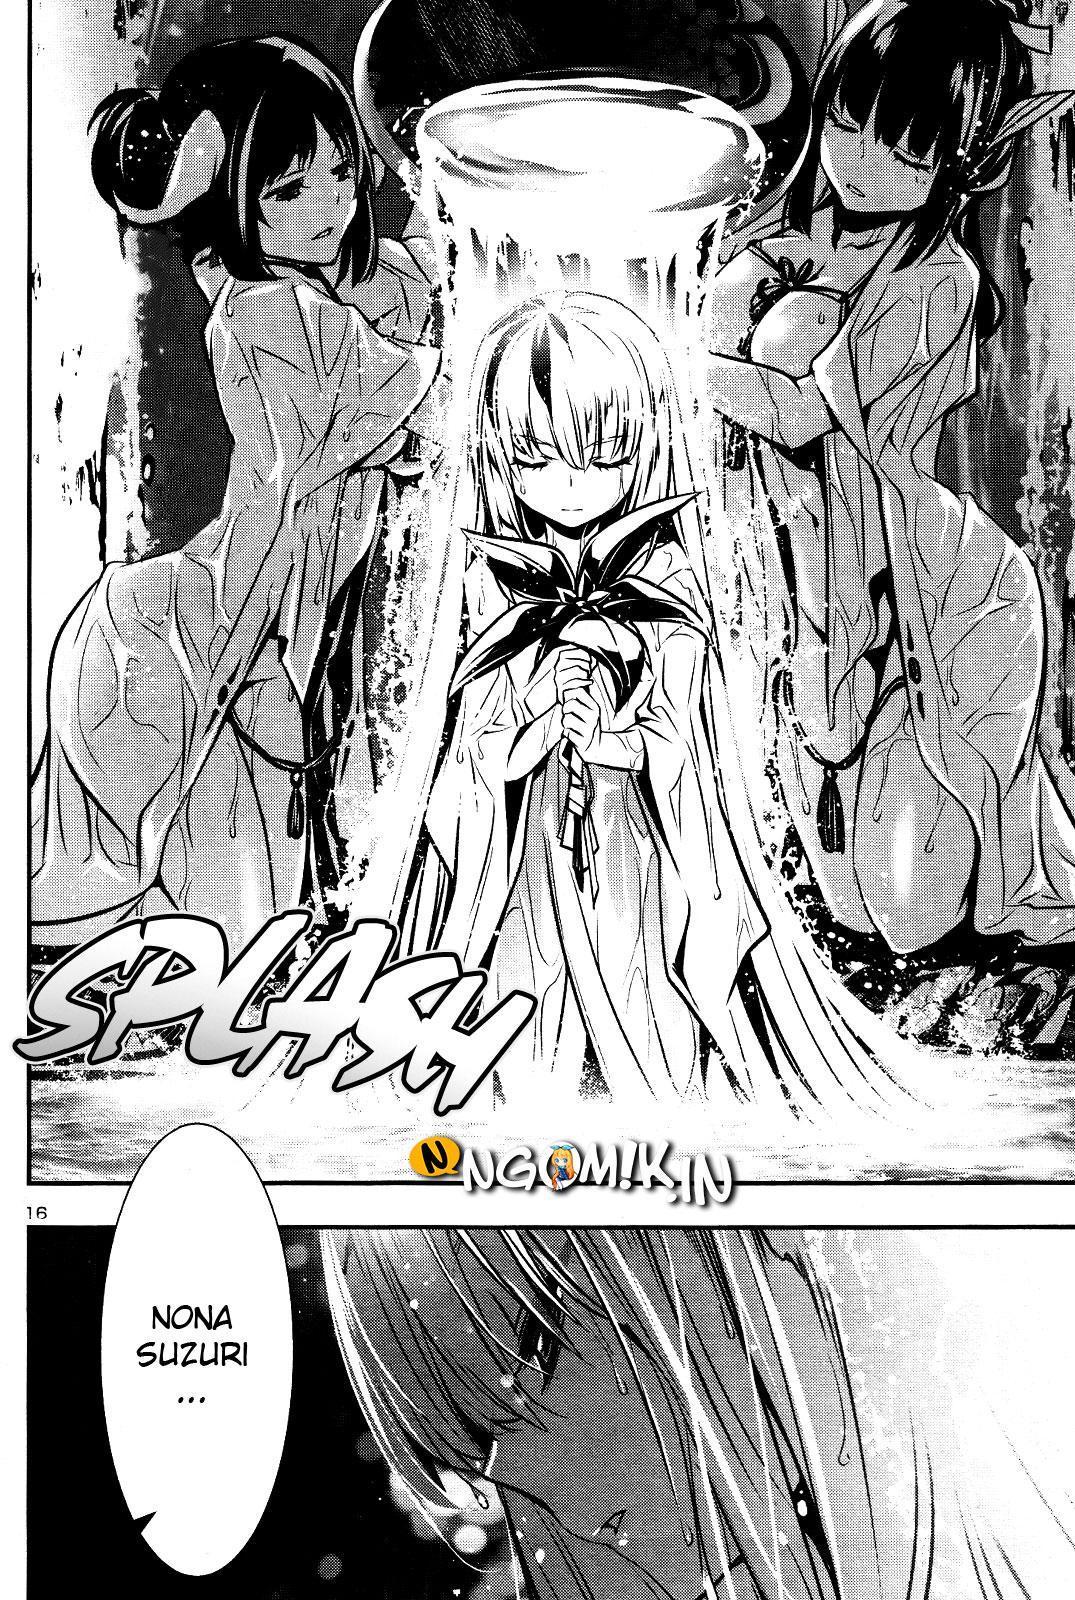 Shinju no Nectar Chapter 27